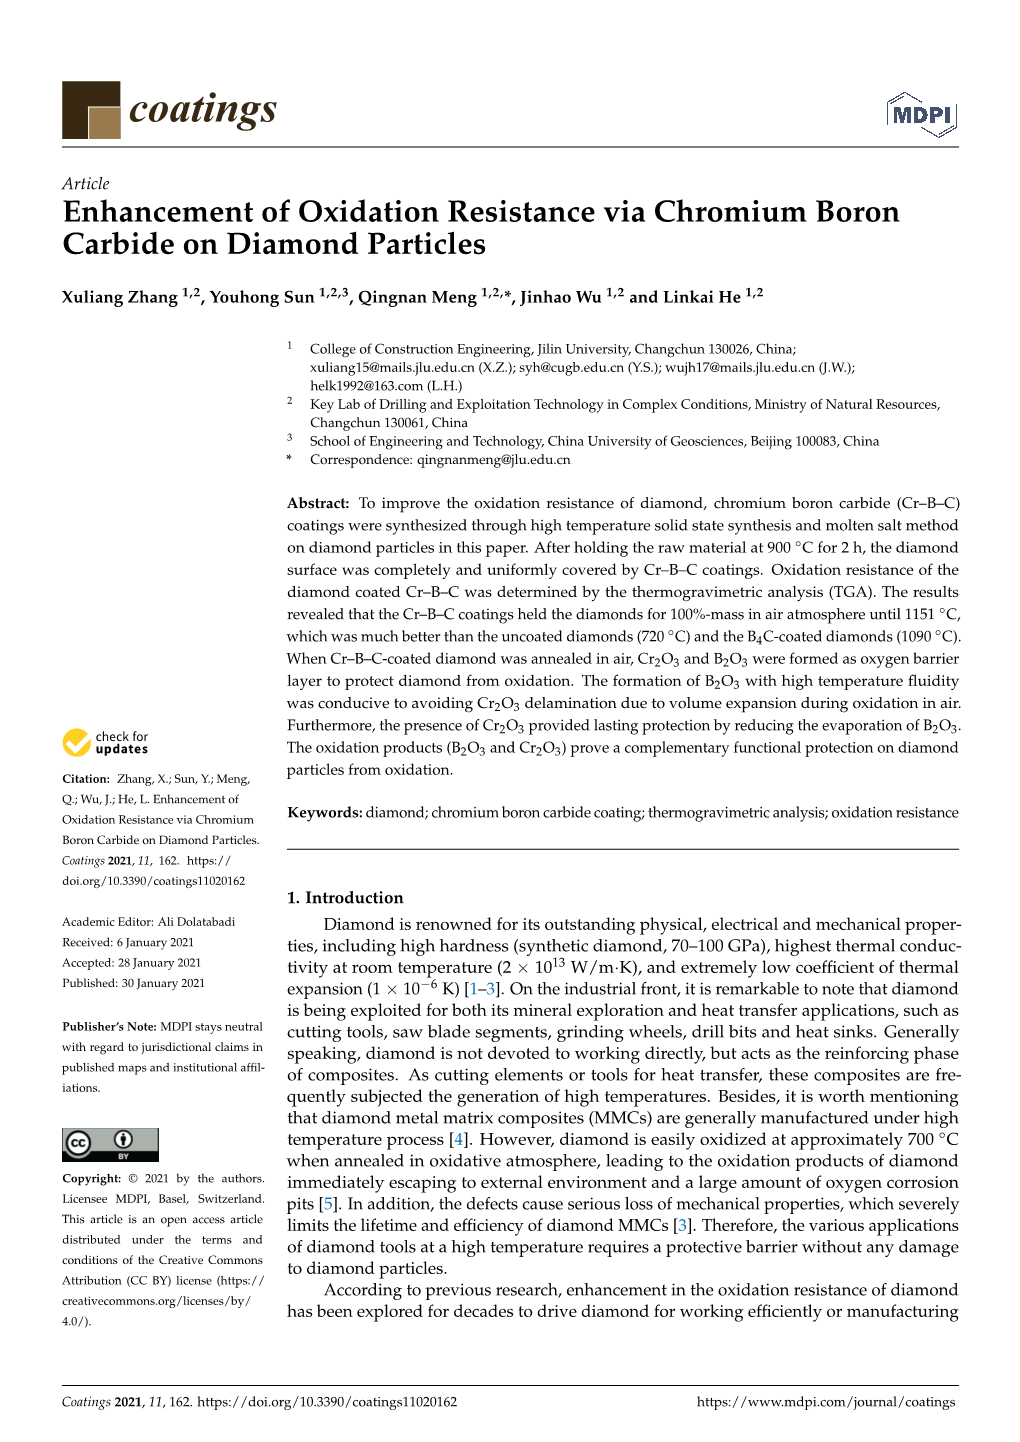 Enhancement of Oxidation Resistance Via Chromium Boron Carbide on Diamond Particles